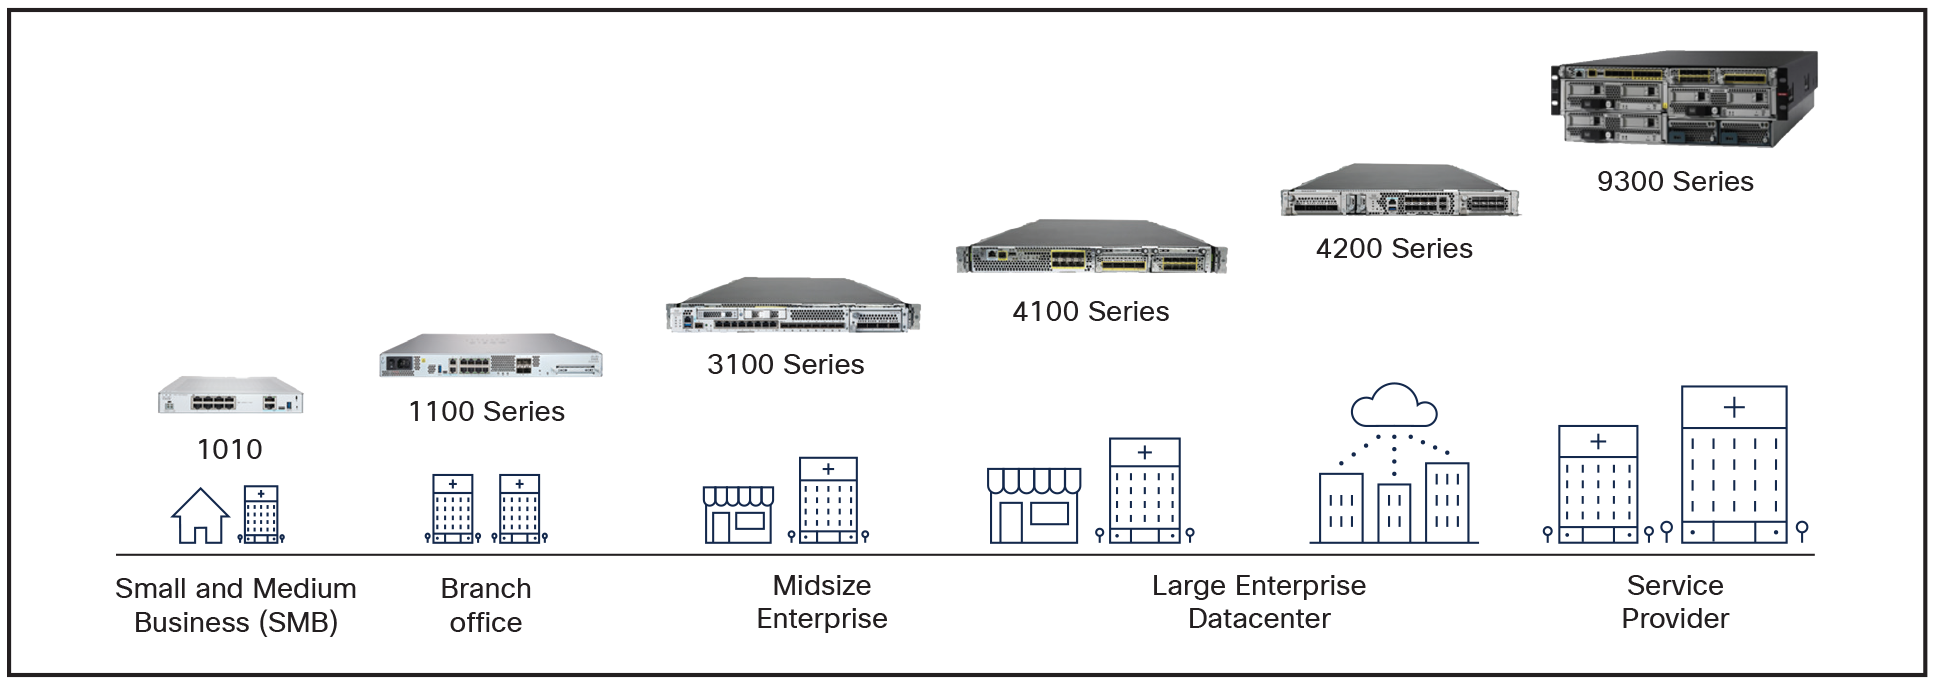 Cisco Secure Firewall hardware portfolio